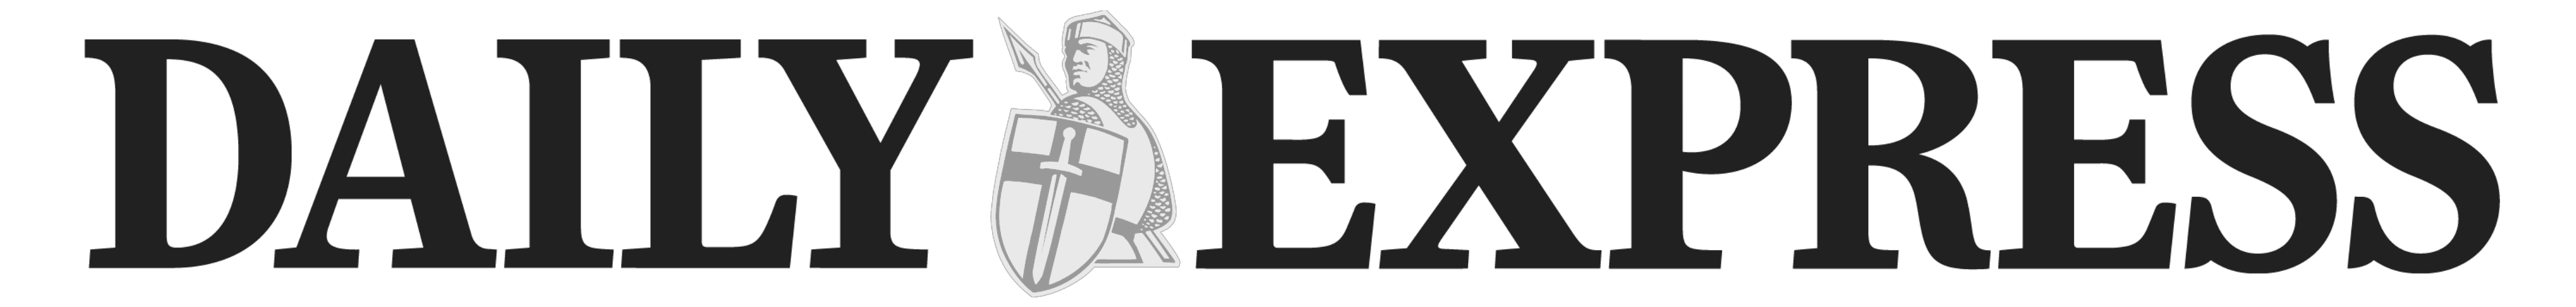 Logo Daily Express